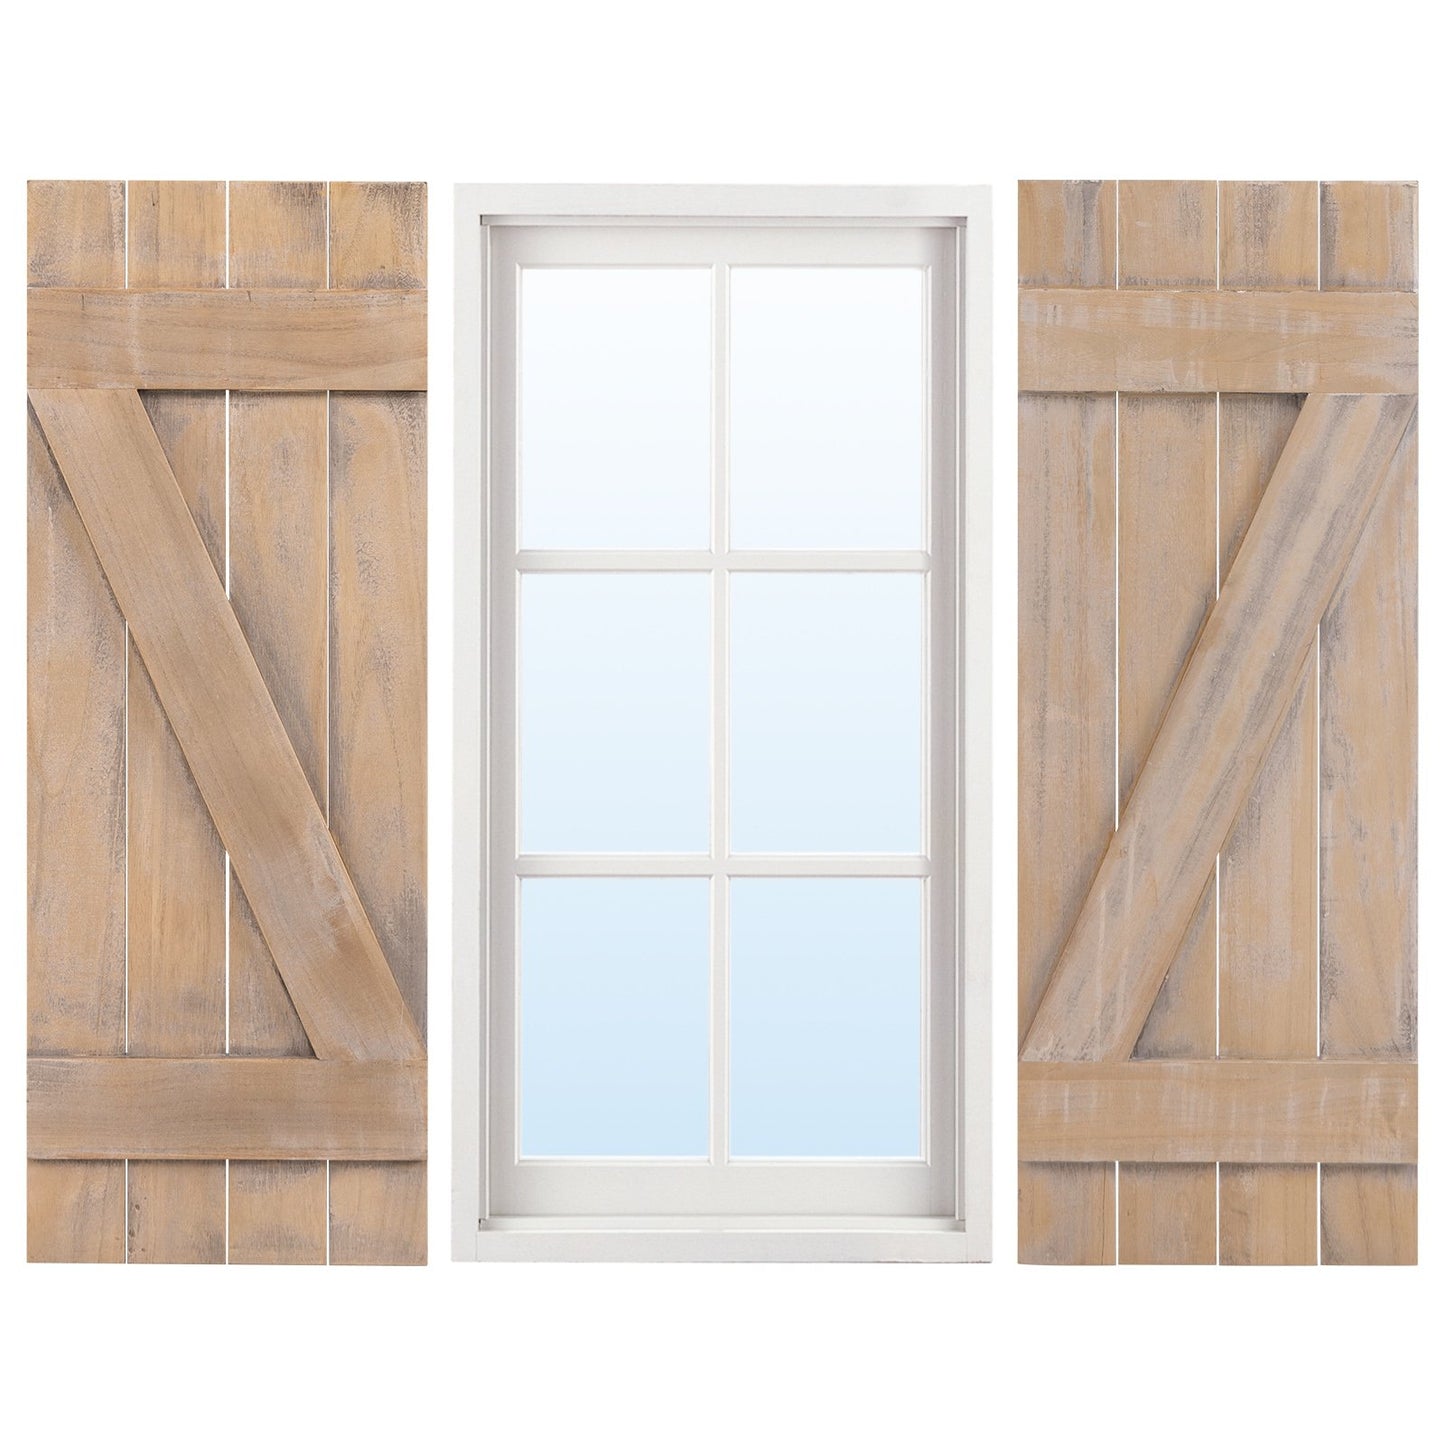 36 x 13 Inch Farmhouse Paulownia Wood Window Shutters Set of 2 for Windows, Light Brown